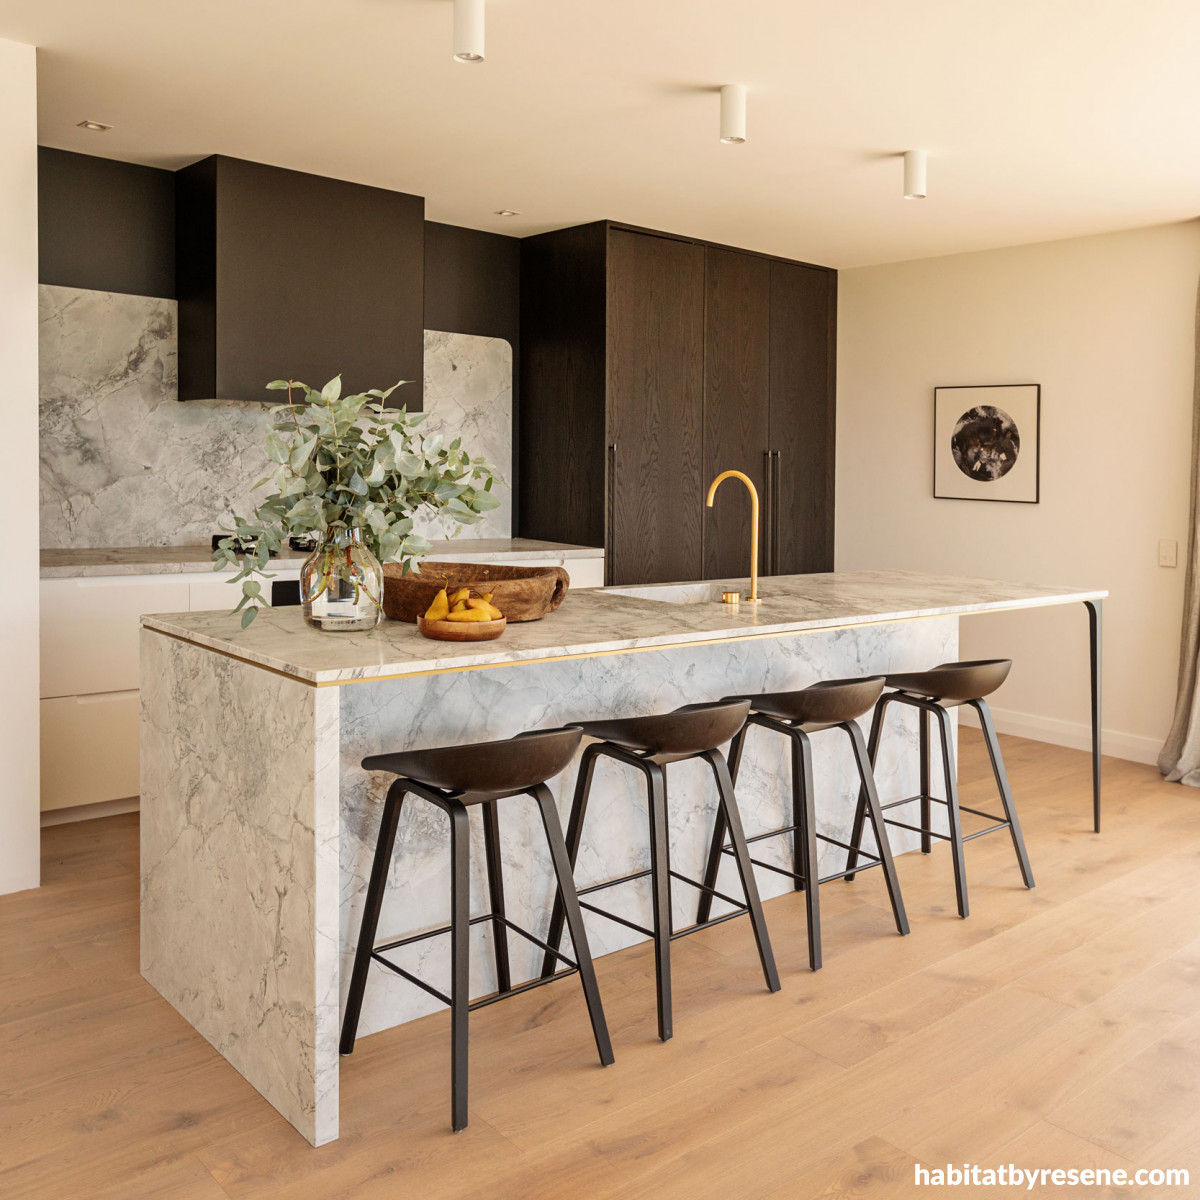 7 kitchen designers share their top kitchen design tips and resene